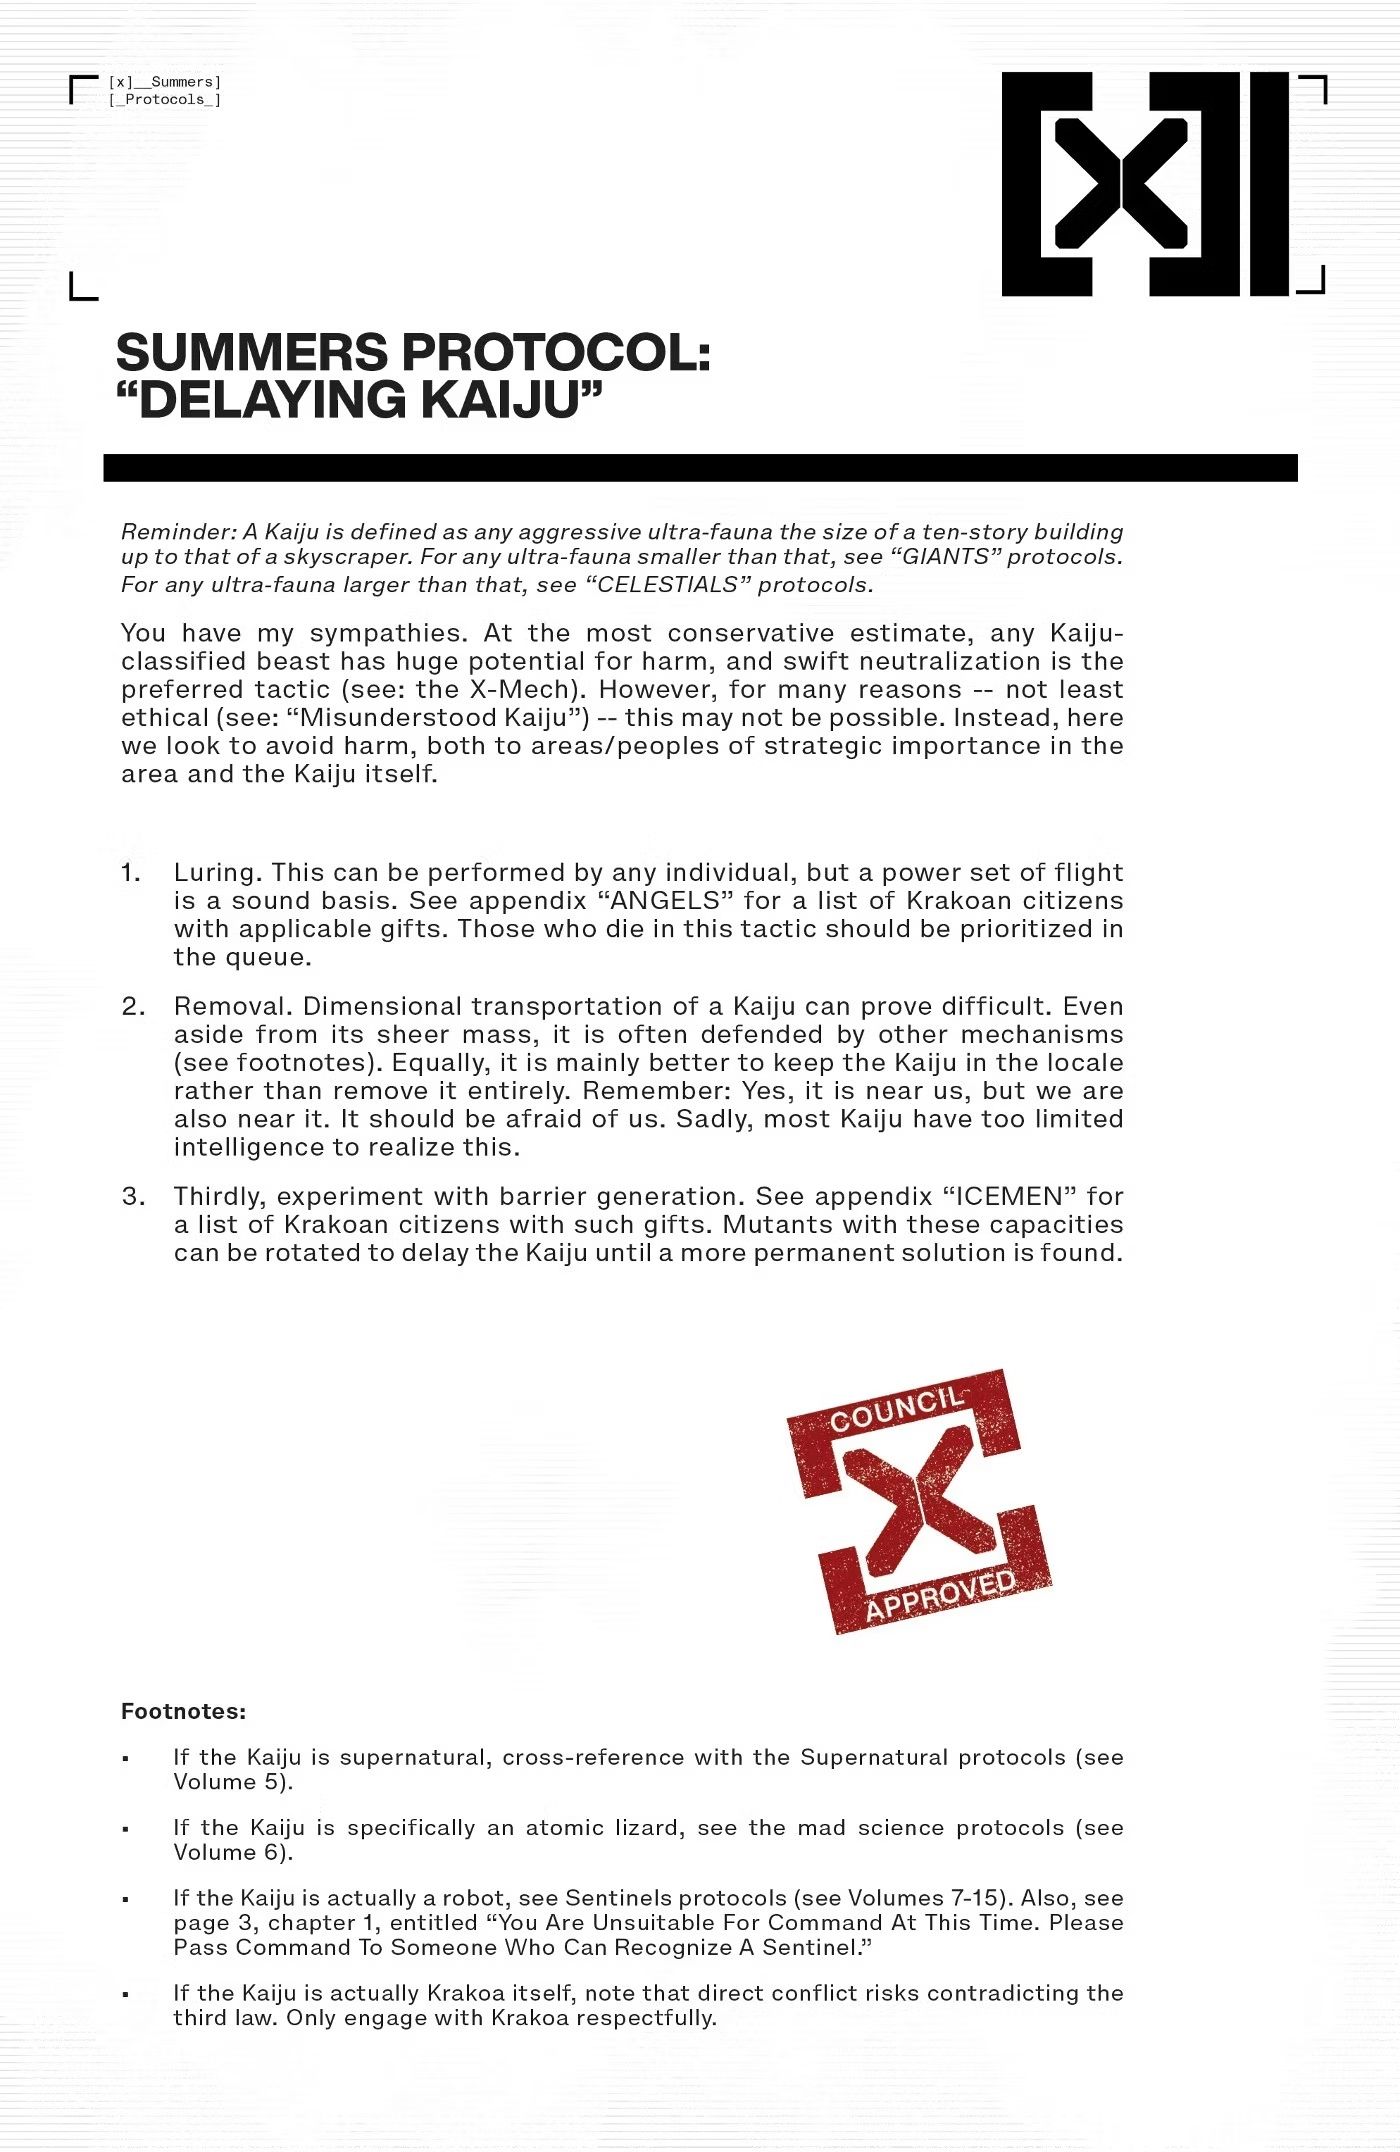 X-Men's Summers Protocol: Delaying Kaiju, written instructions from Cyclops on handling Kaiju threats. 